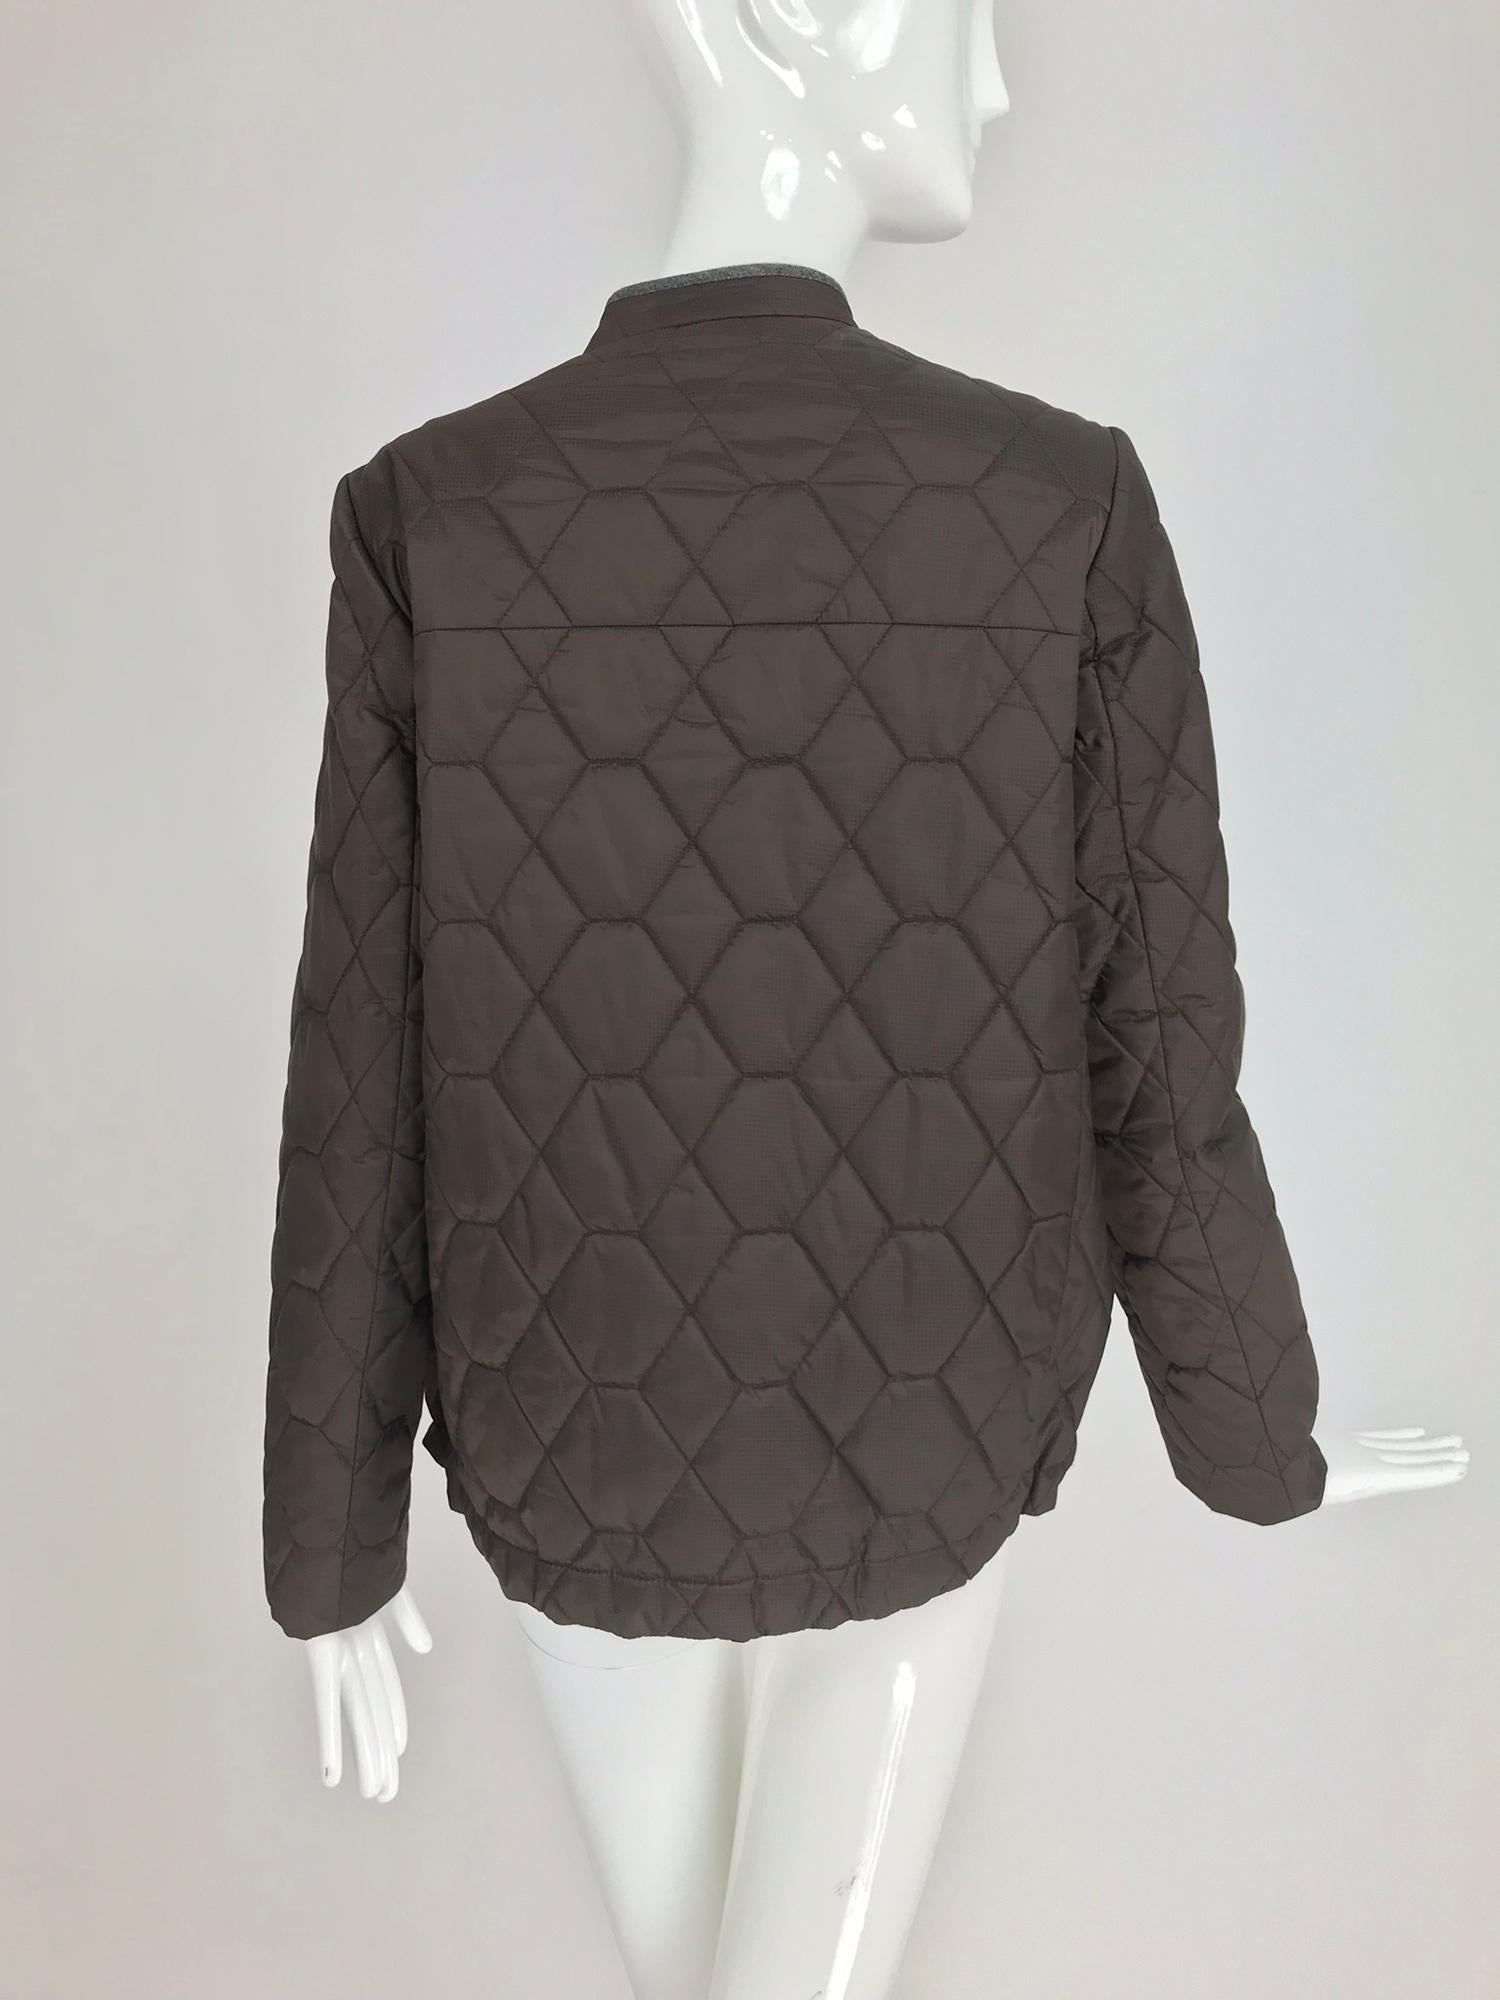 Brunello Cucinelli Chocolate Brown geometric pattern Quilted Sport Jacket 42 2